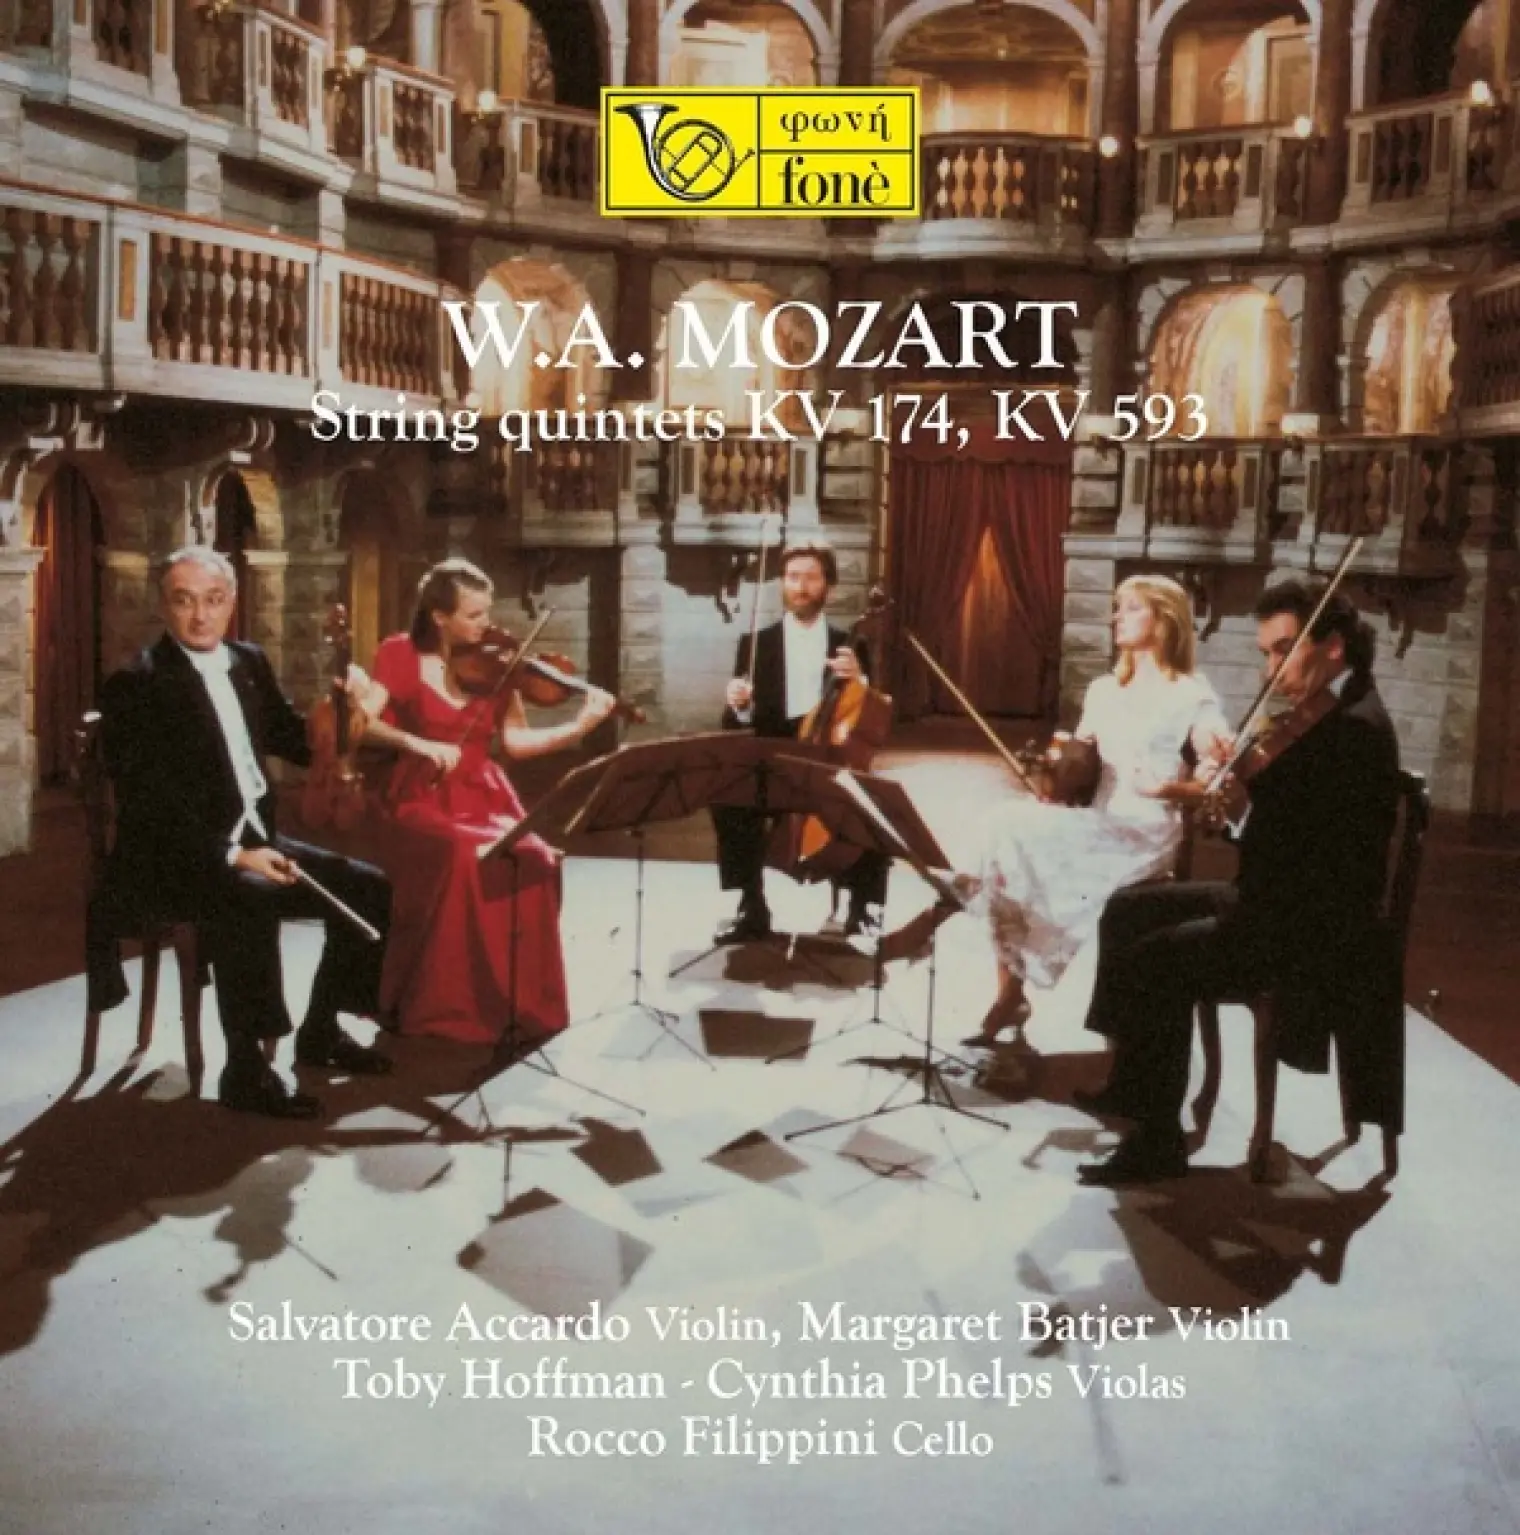 Mozart: String quintets KV 174, KV 593 -  Salvatore Accardo 